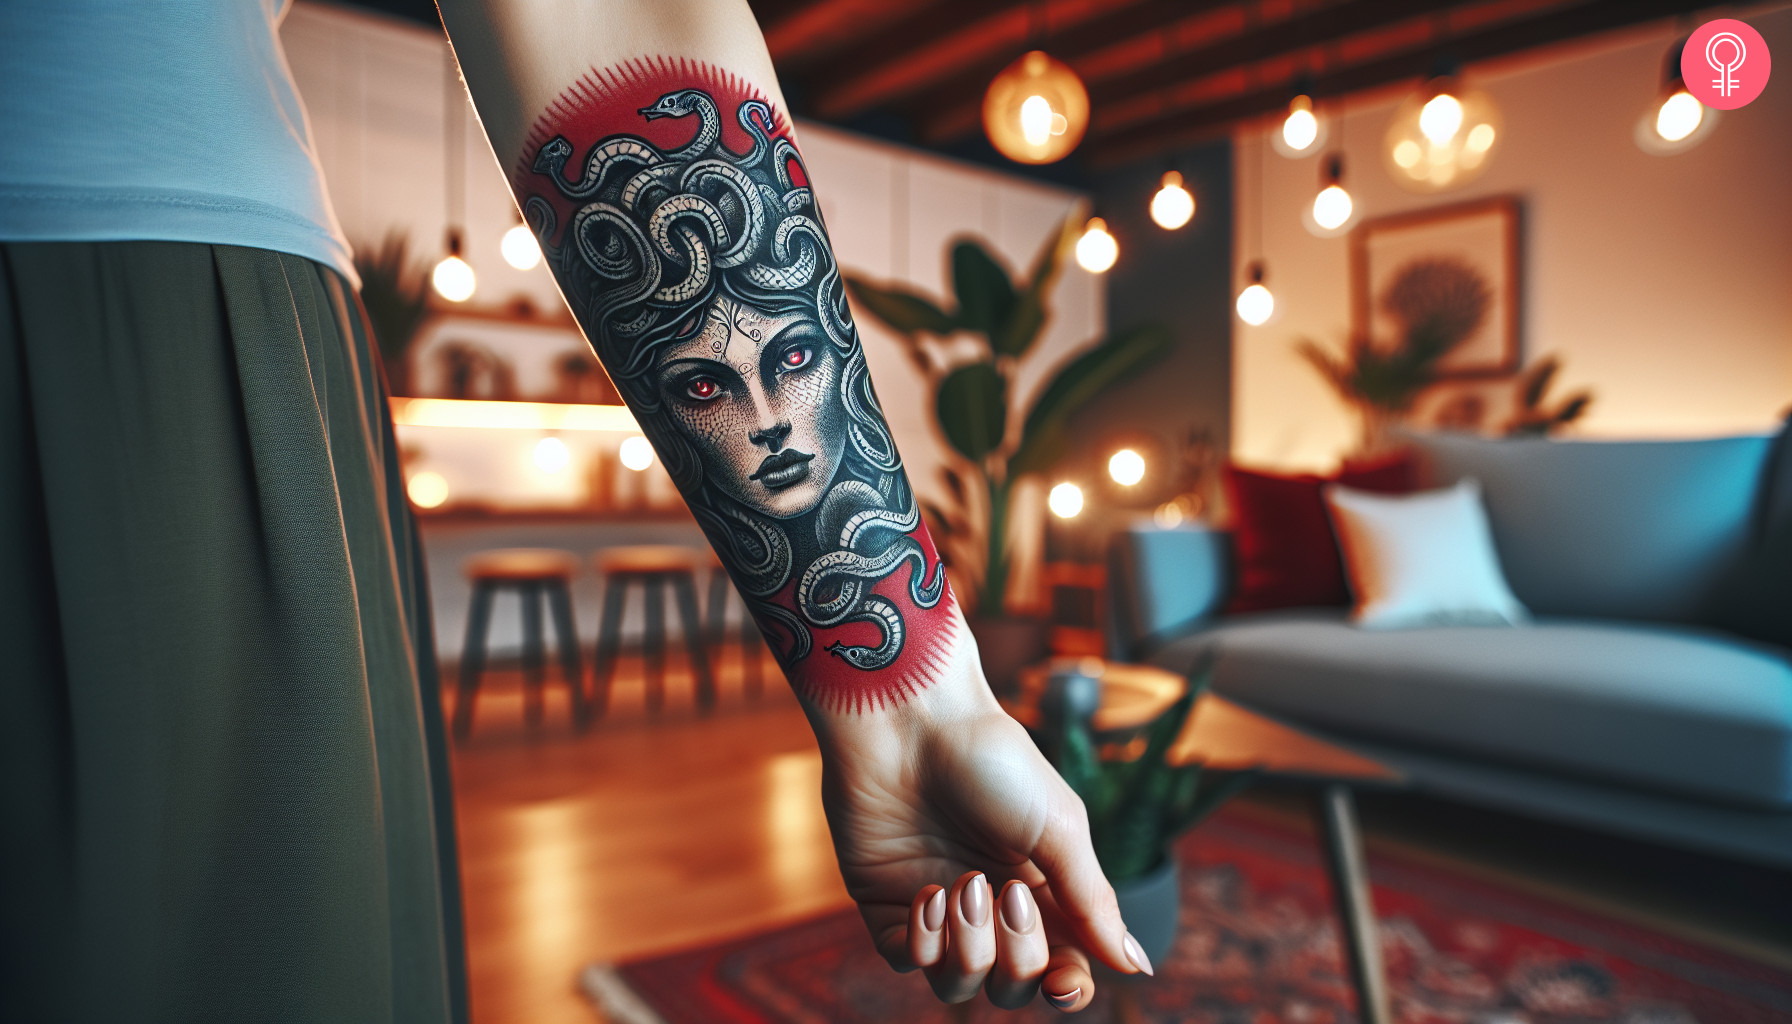 Medusa tattoo on the forearm of a woman